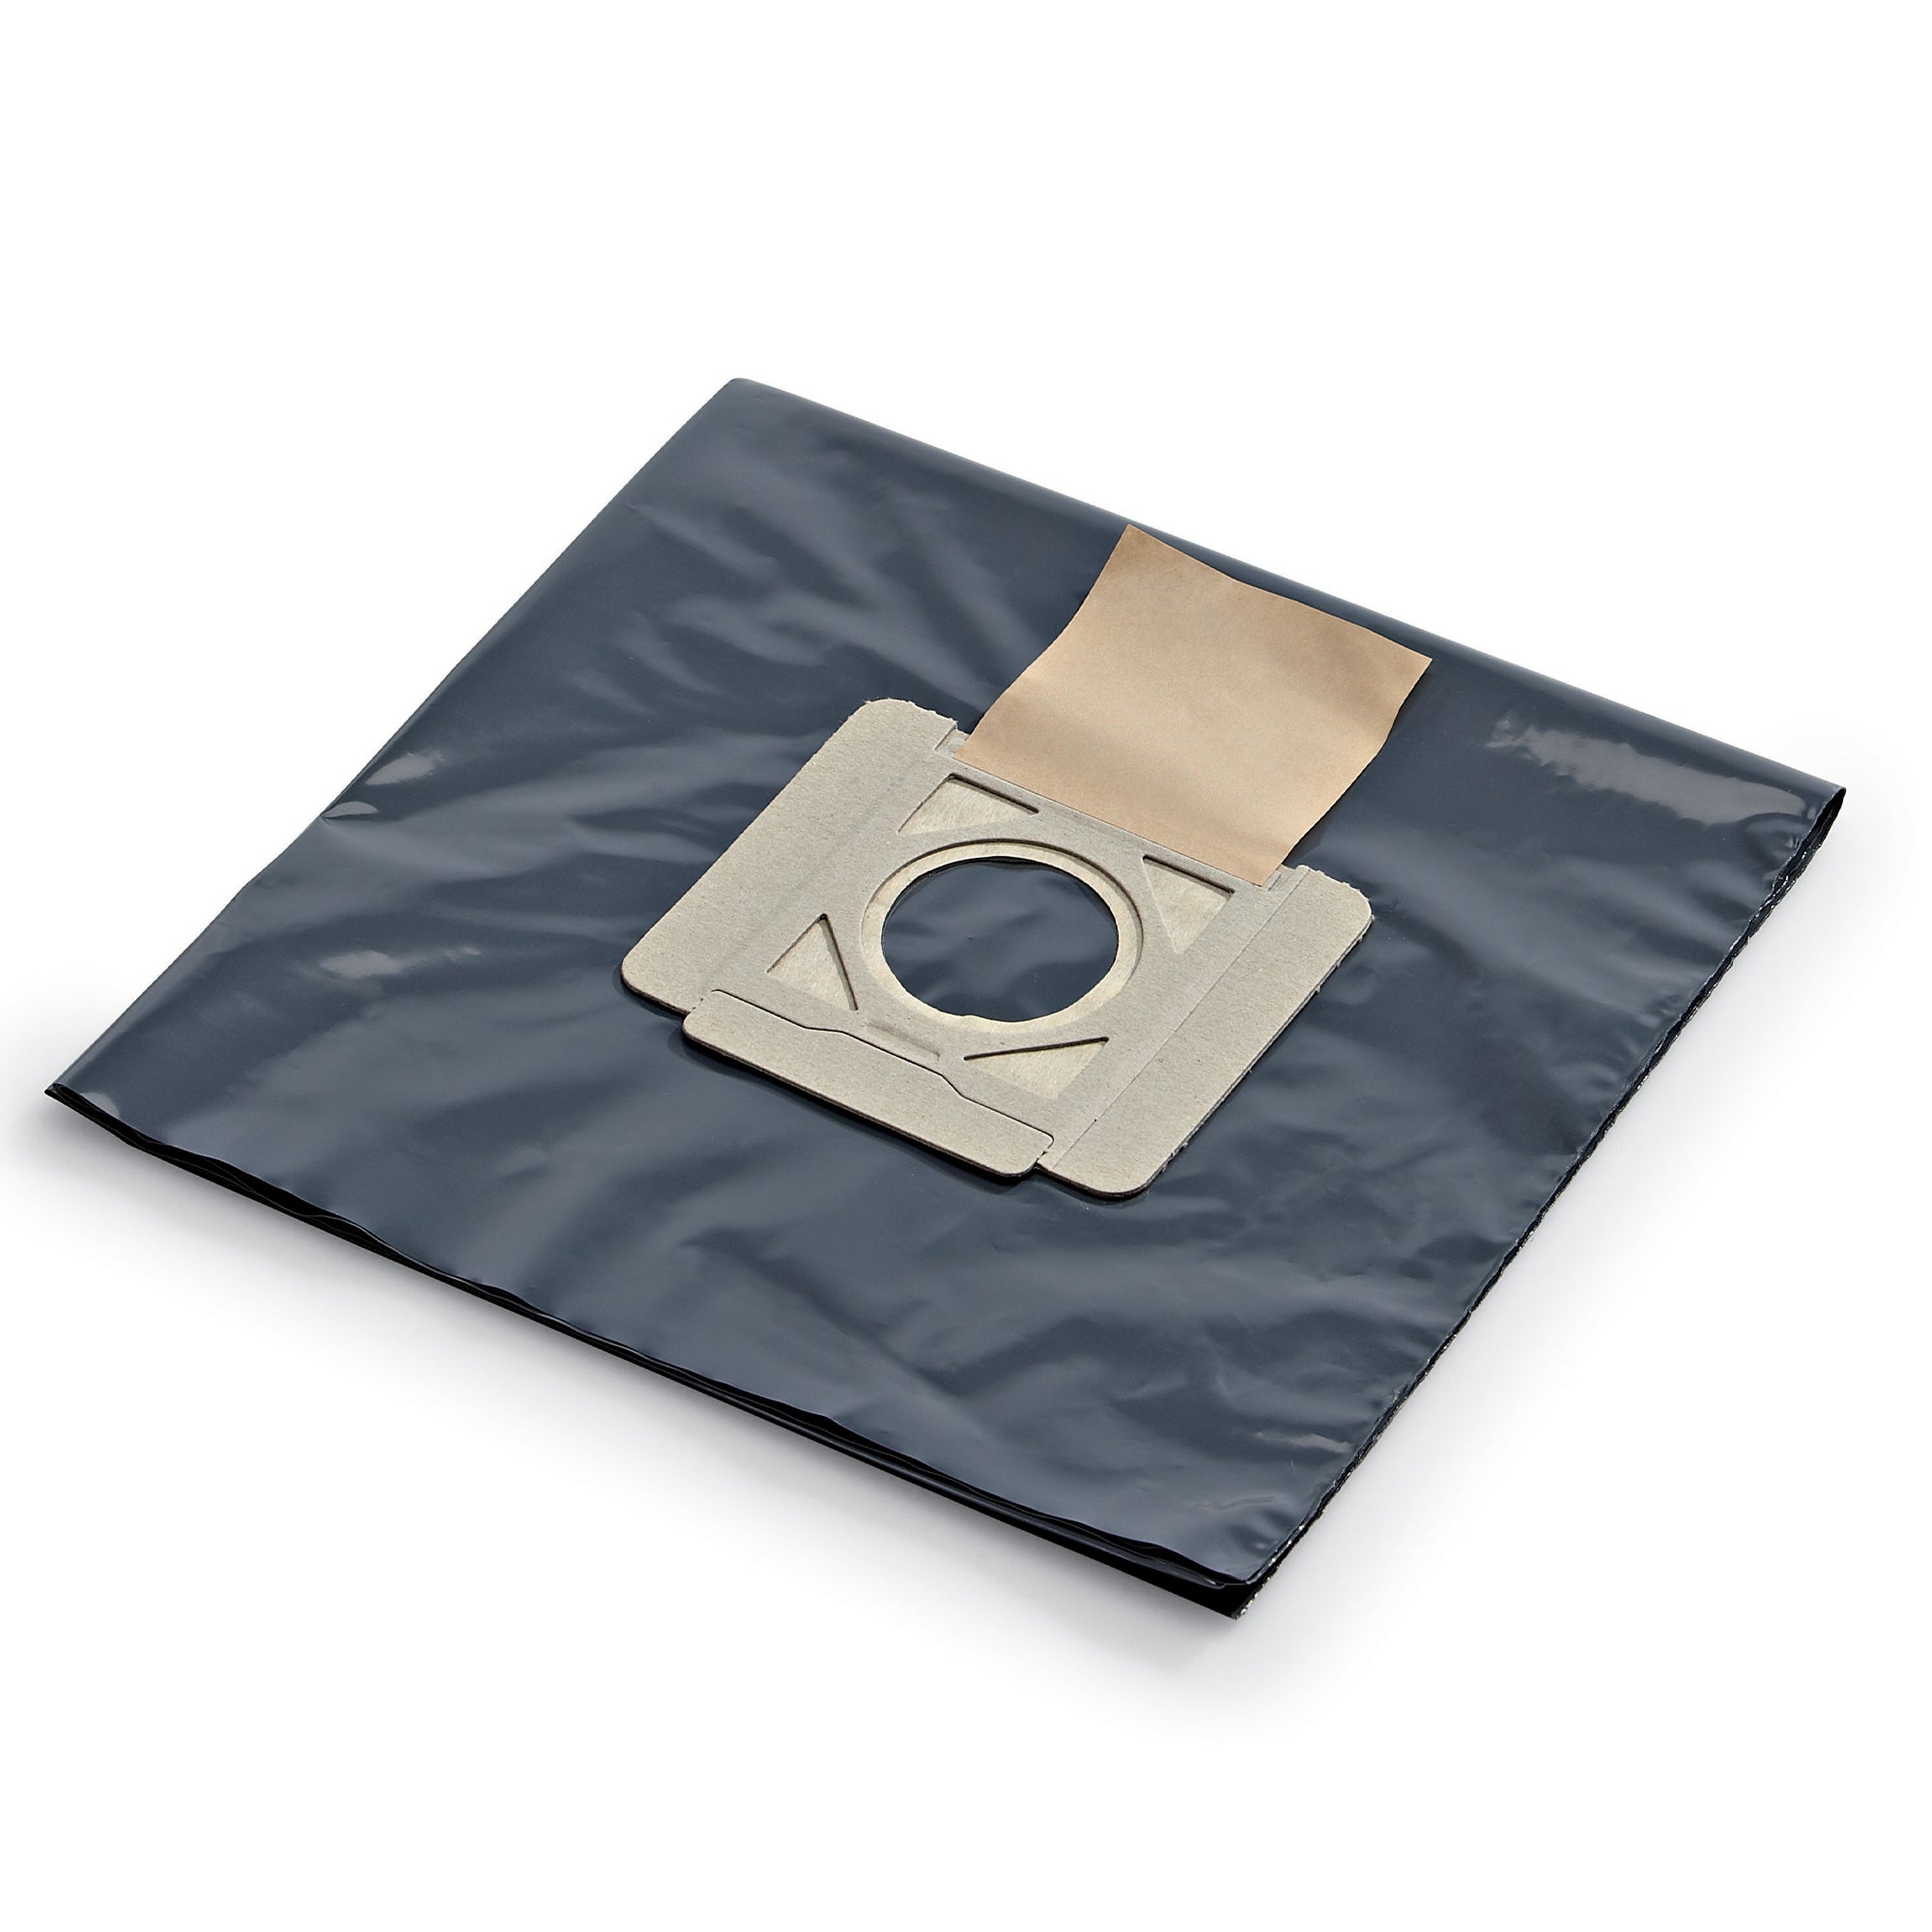 Bolsas de filtro desechables flexibles, paquete de 5 (445061)